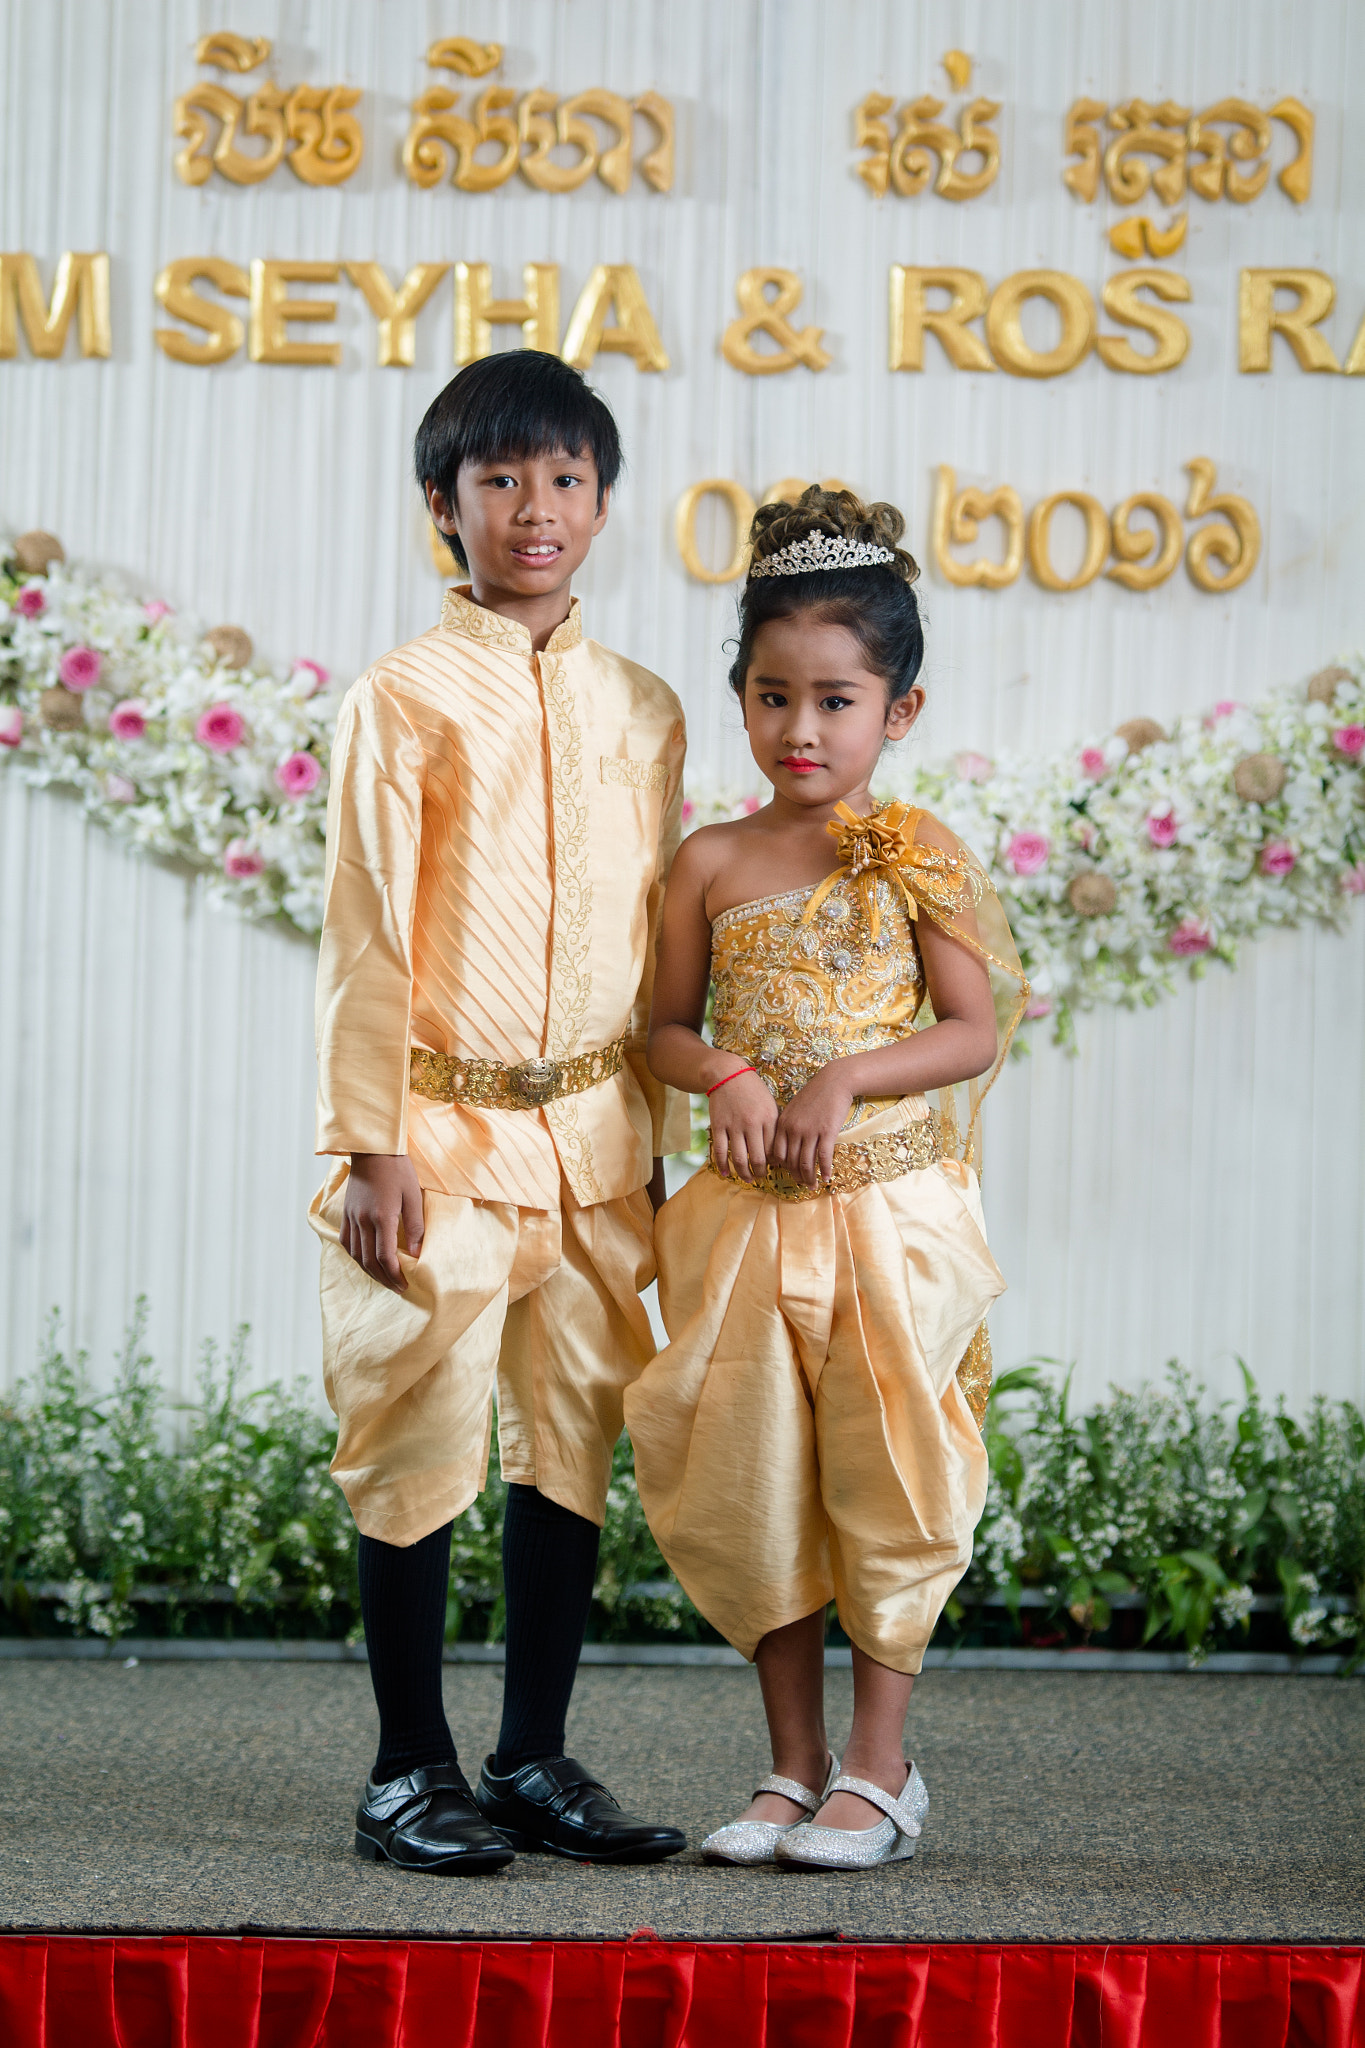 Canon EOS 650D (EOS Rebel T4i / EOS Kiss X6i) + Sigma 70-200mm F2.8 EX DG OS HSM sample photo. Lim seyha & ros rotana's wedding photography